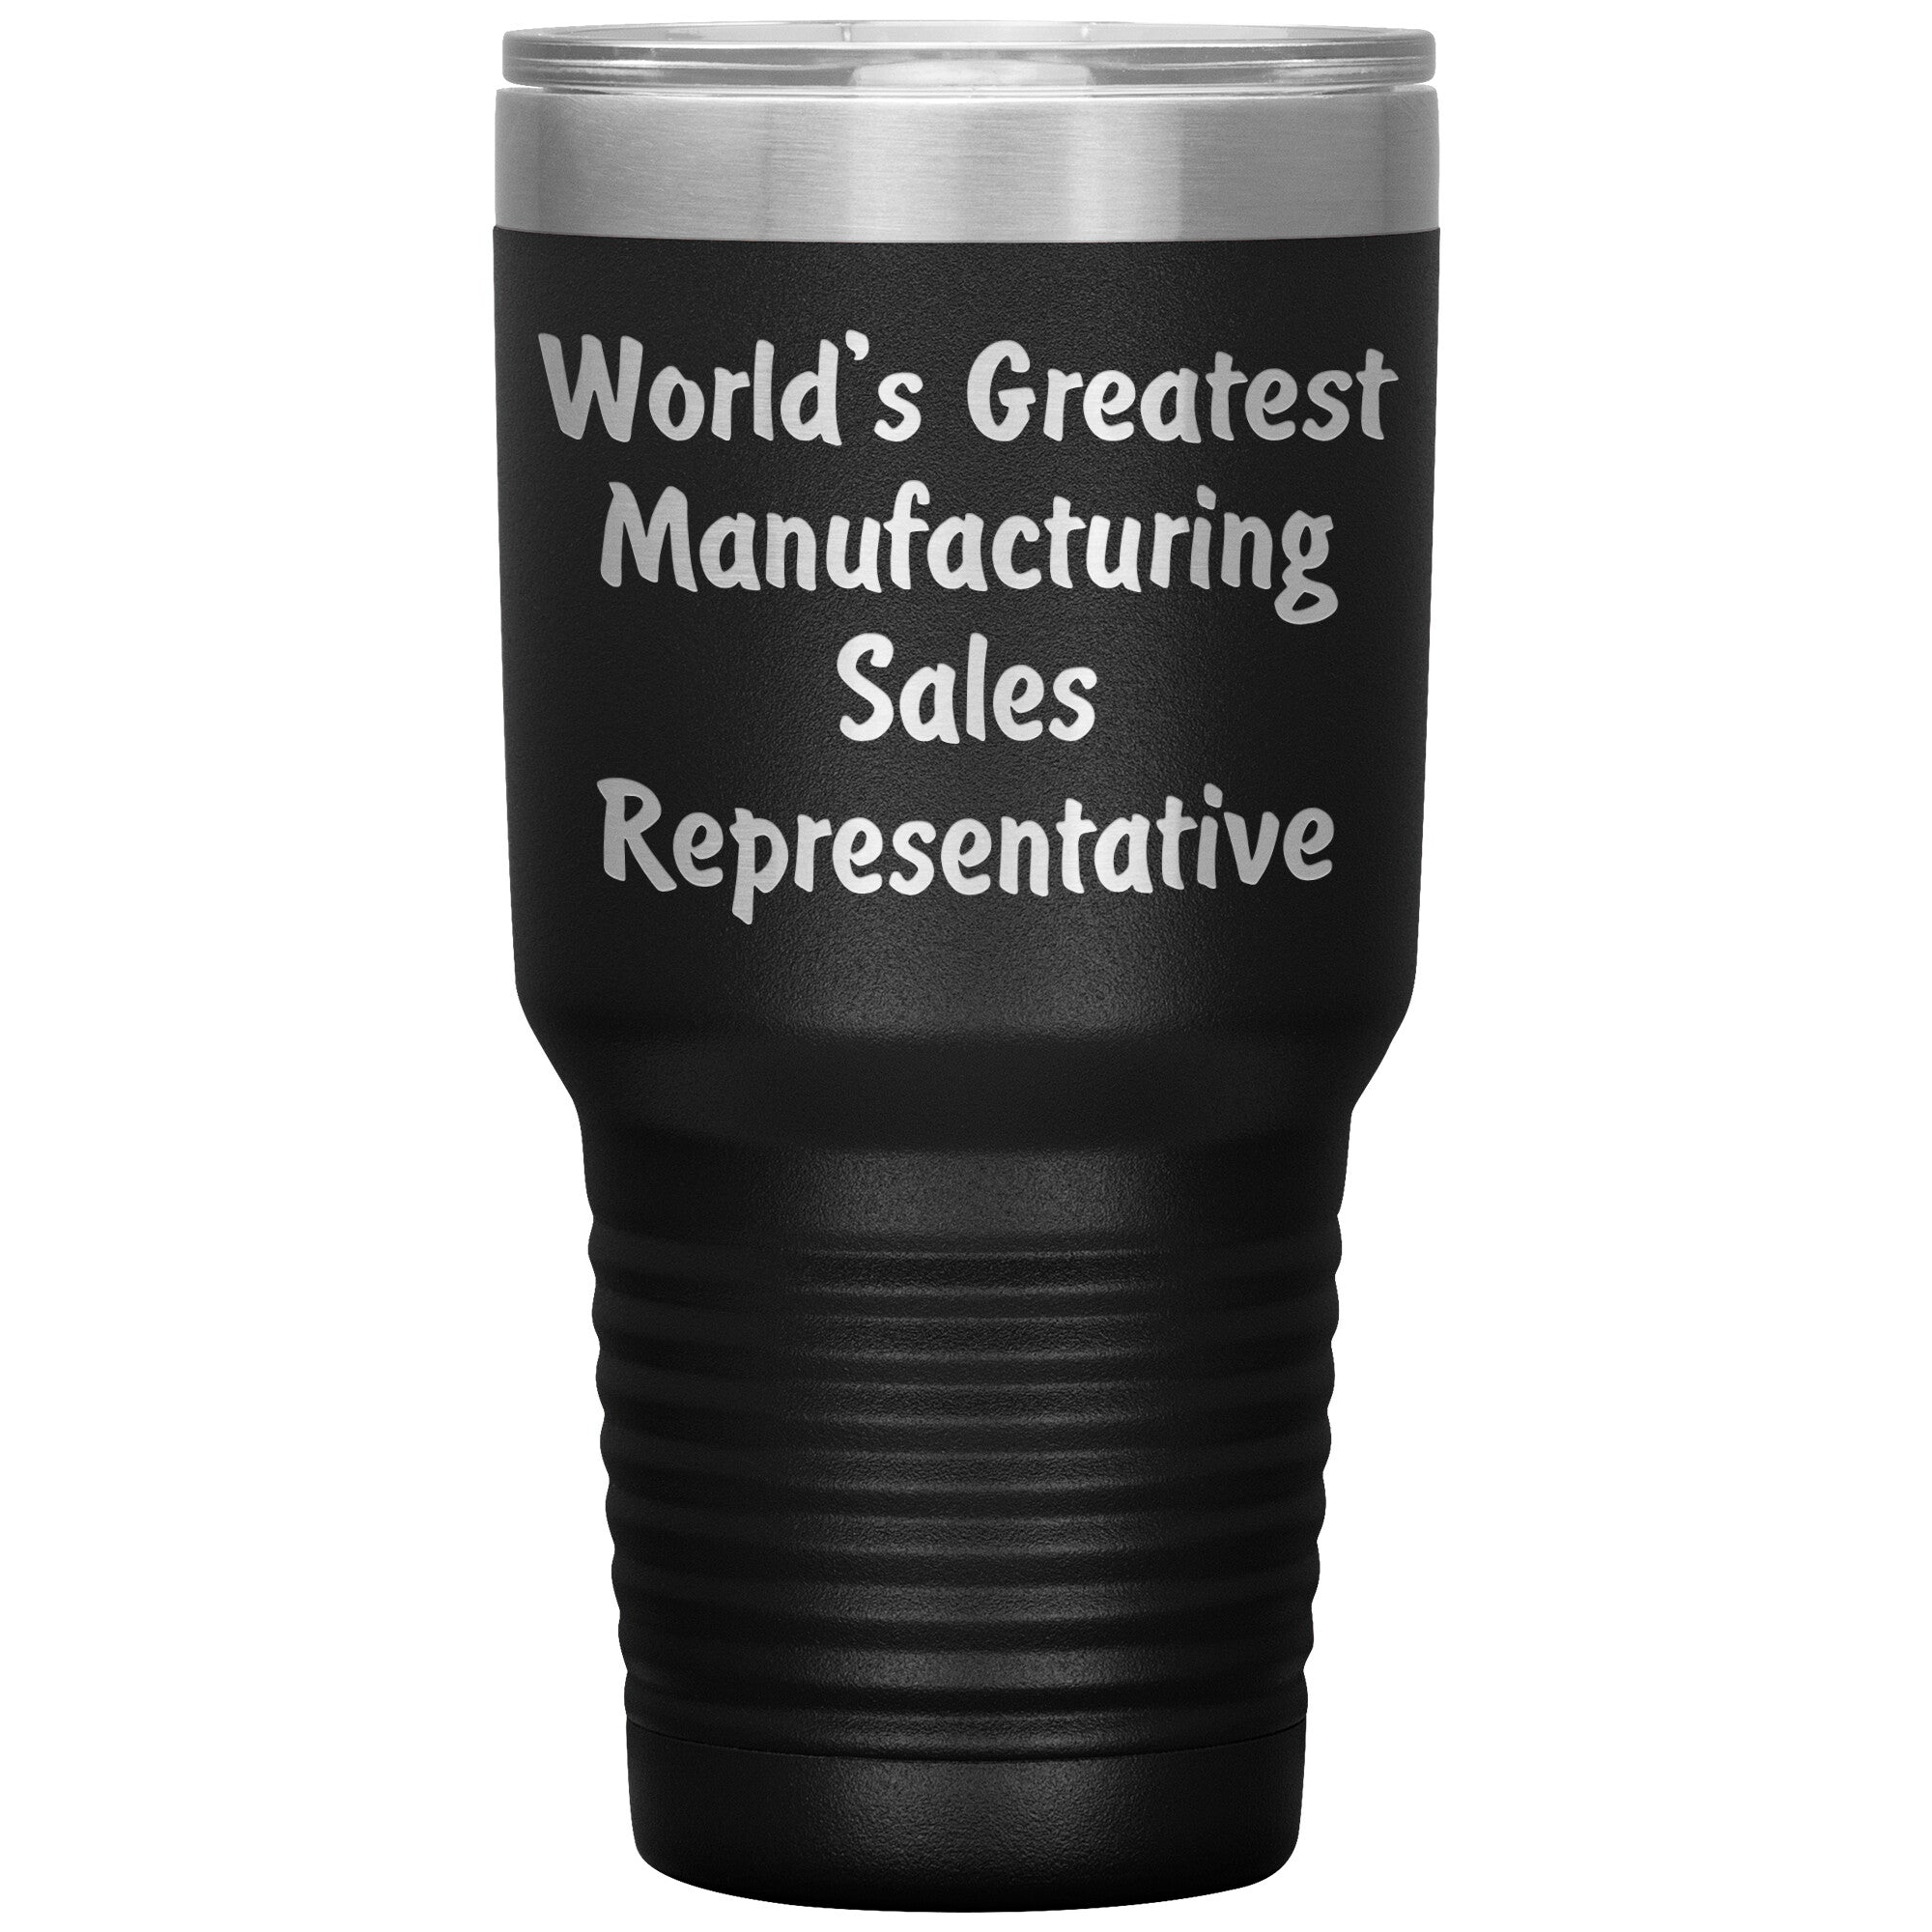 World's Greatest Manufacturing Sales Representative - 30oz Insulated Tumbler